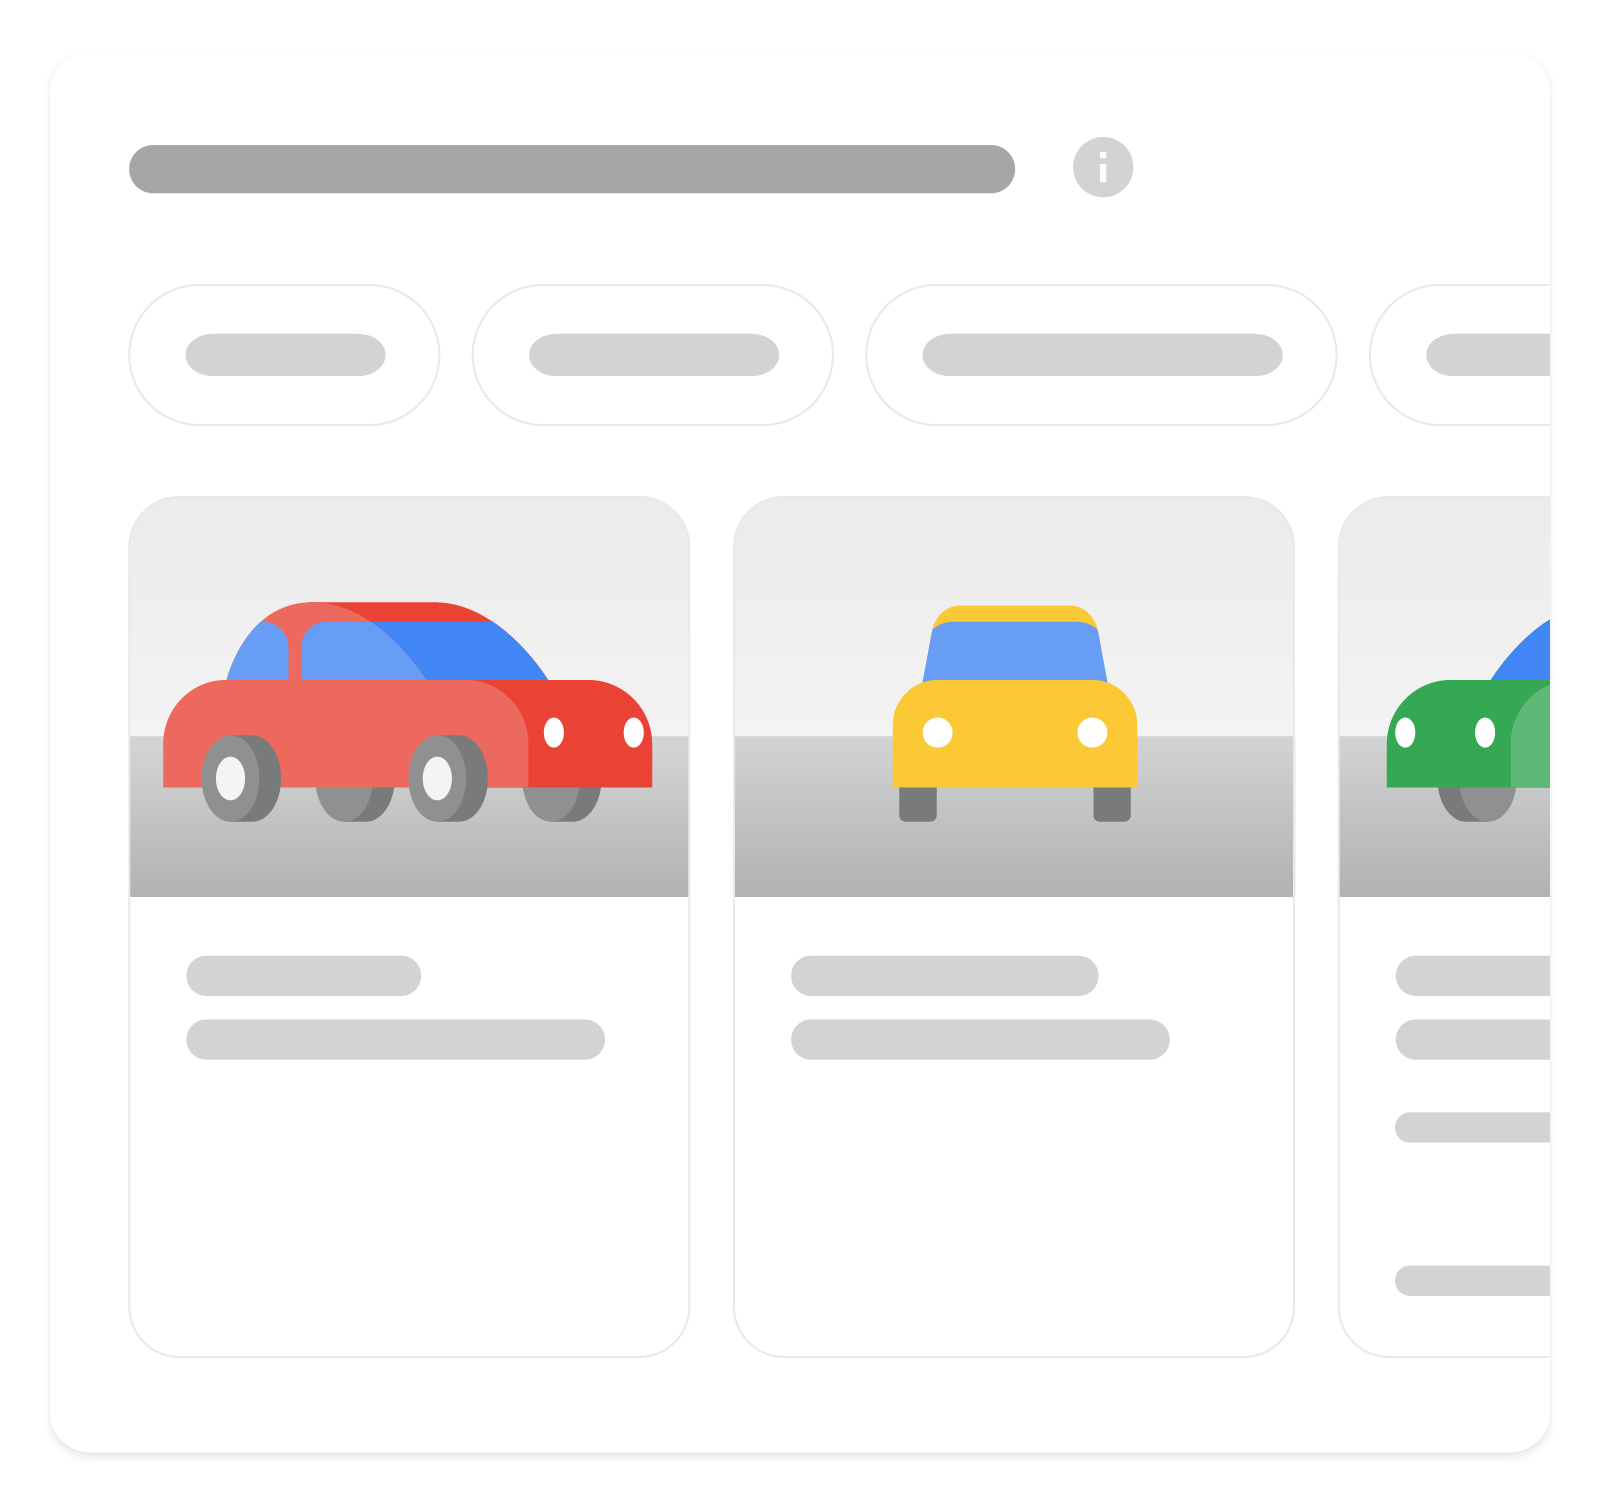 Vehicle listing structured data for car dealerships  |  Google Search Central Blog  |  Google for Developers